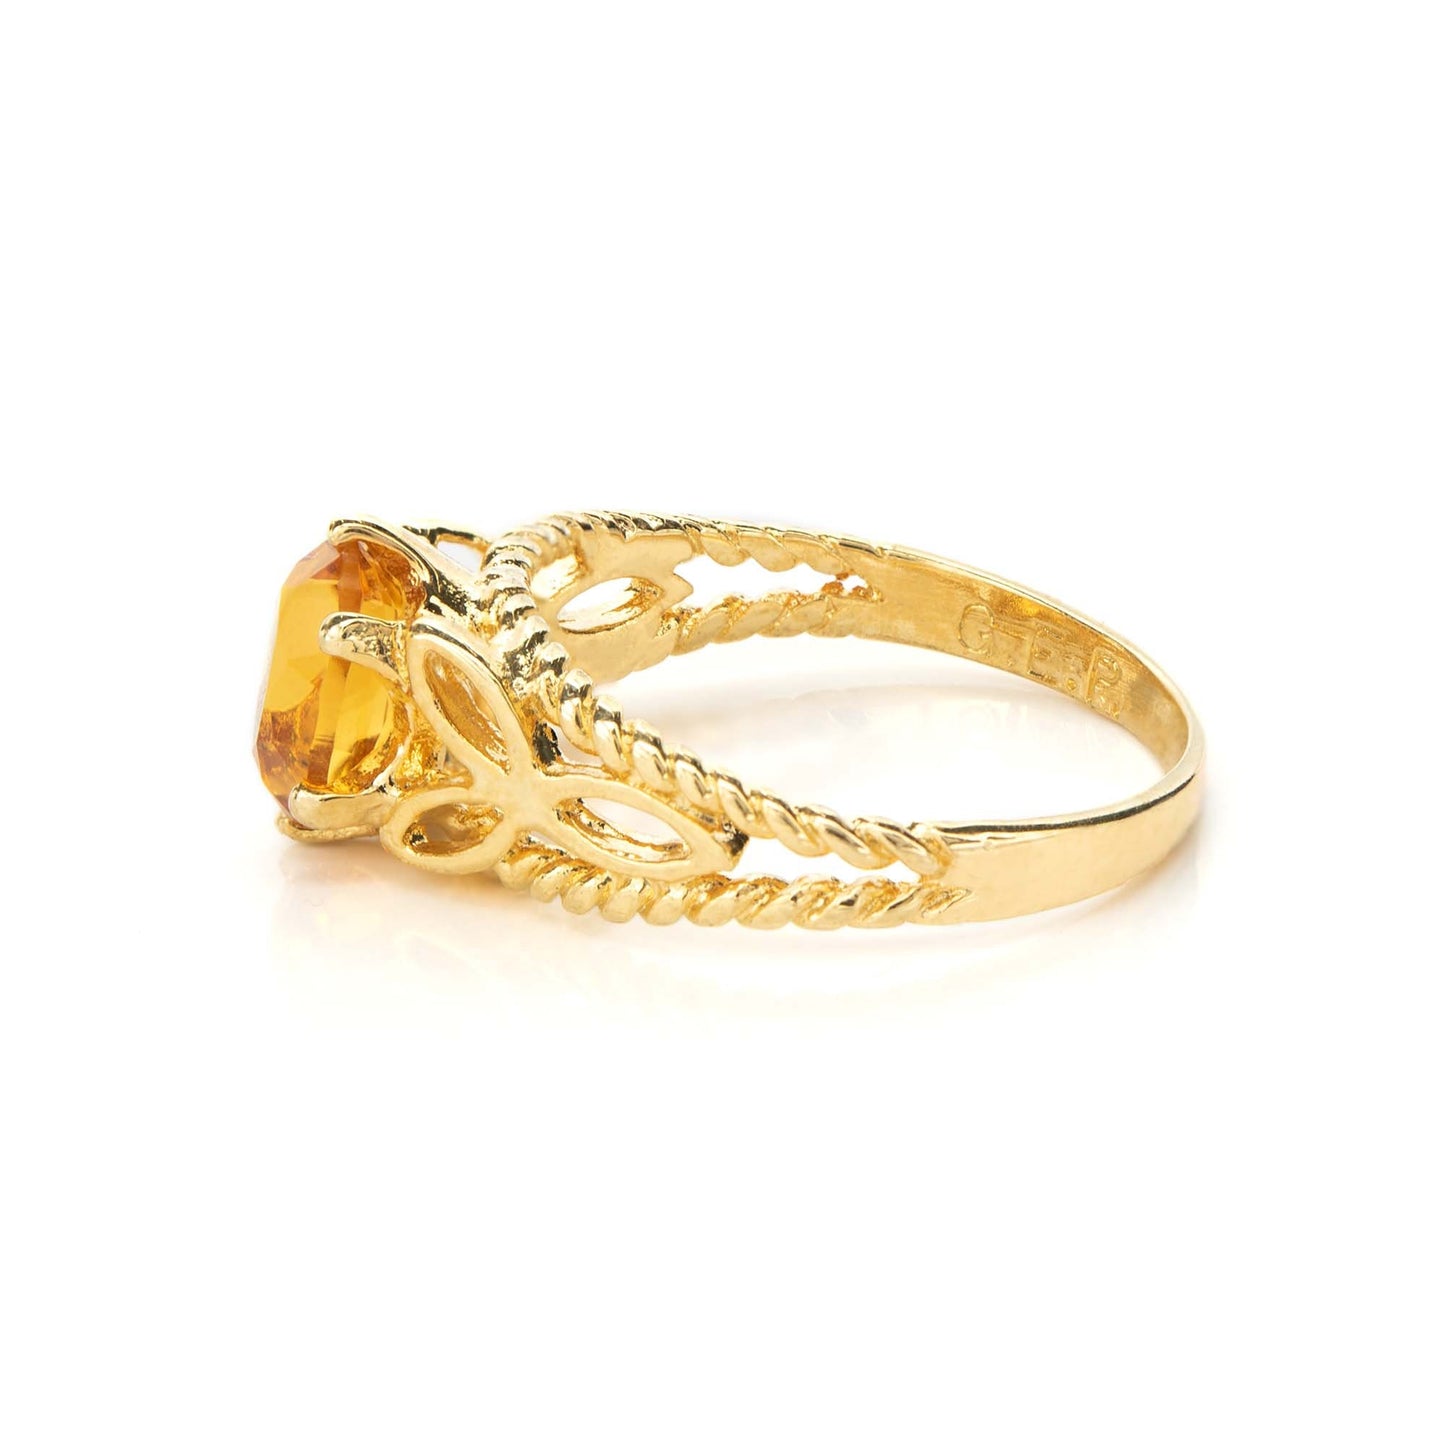 Vintage Light Topaz Swarovski Crystal 18k Gold Filigree Cocktail Ring Made in USA #R300 - Limited Stock - Never Worn